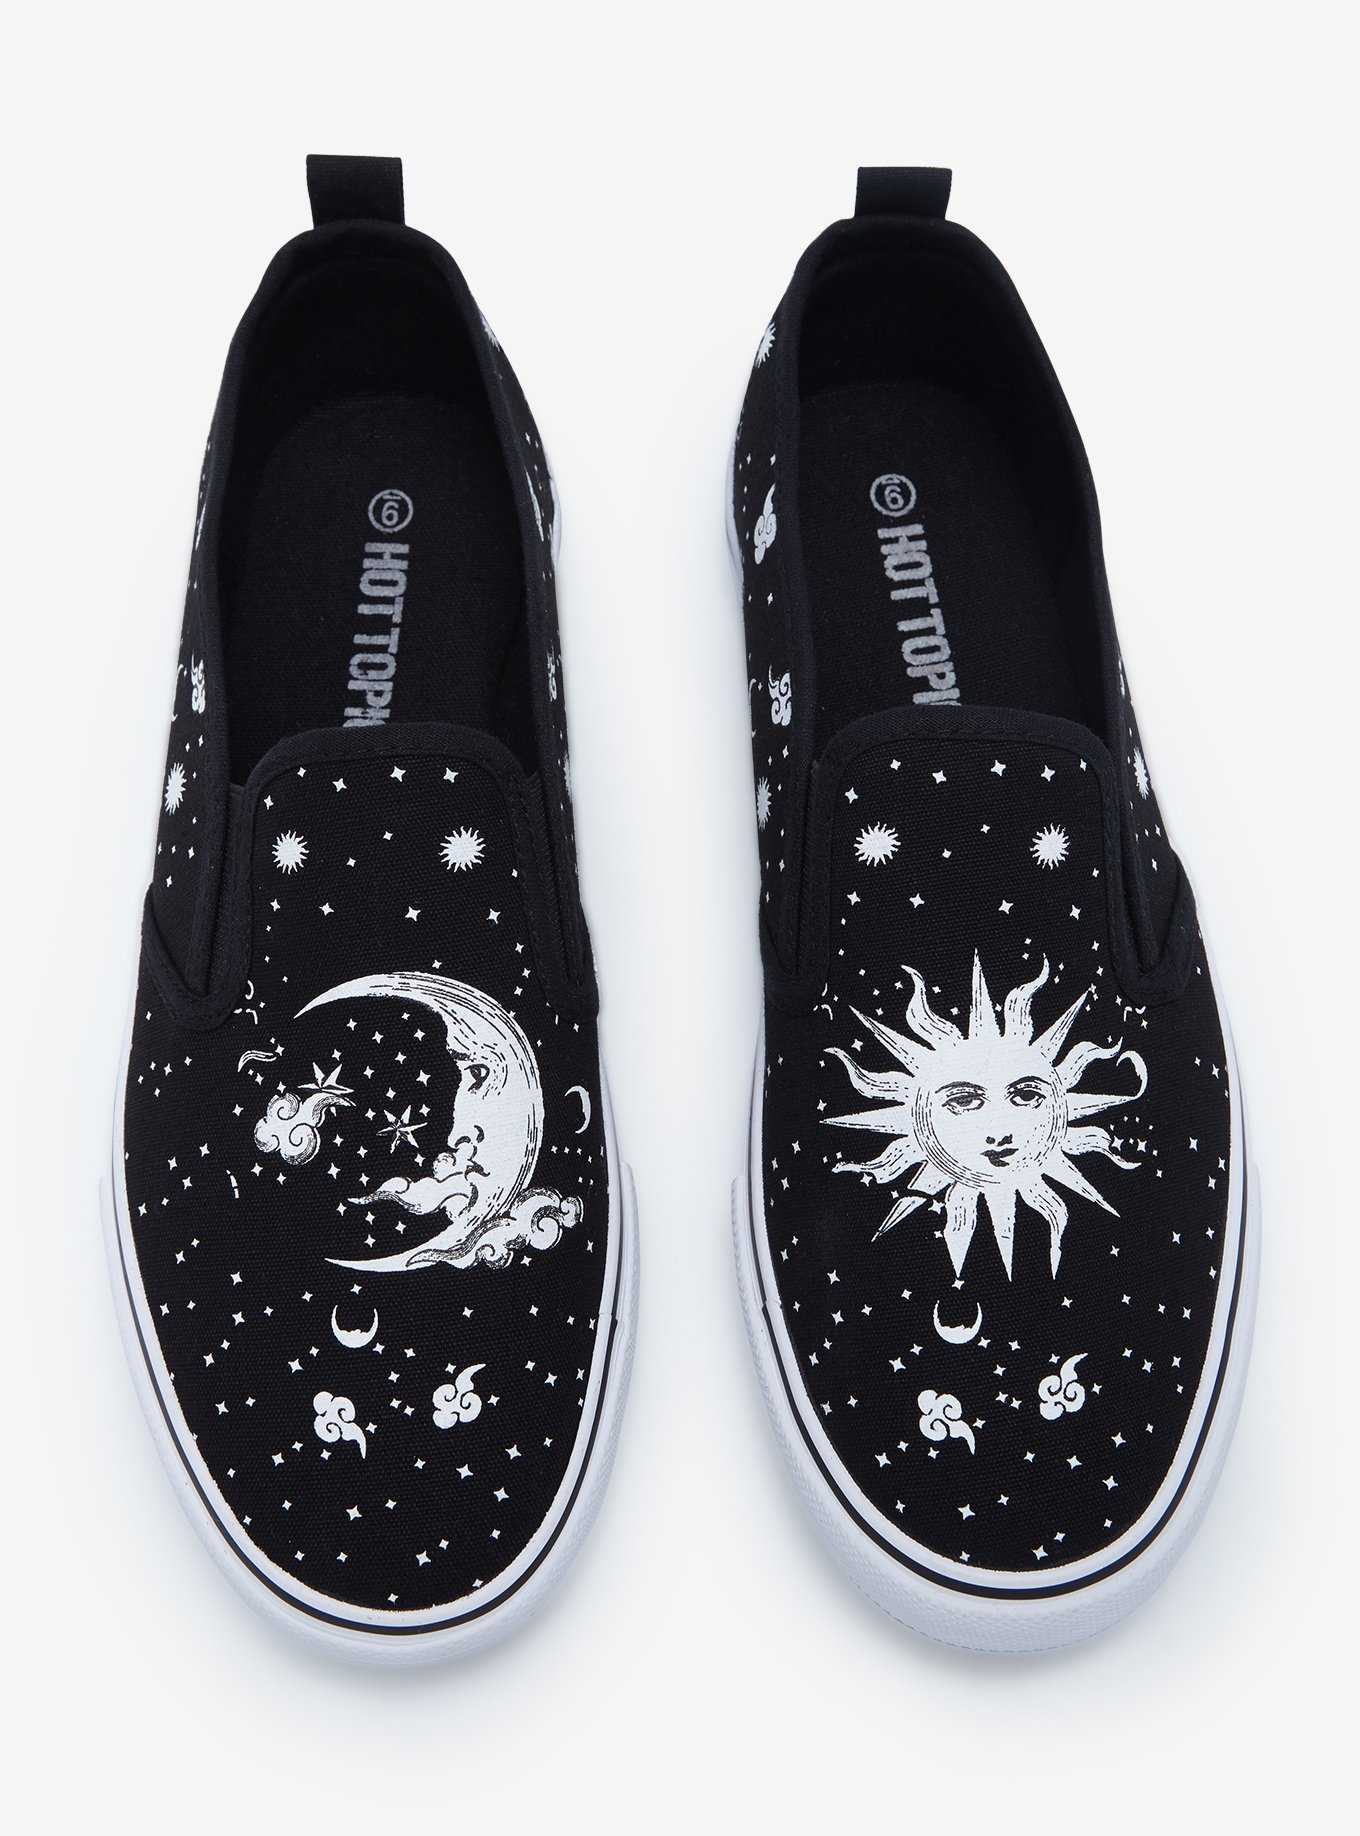 Celestial Slip-On Sneakers, , hi-res